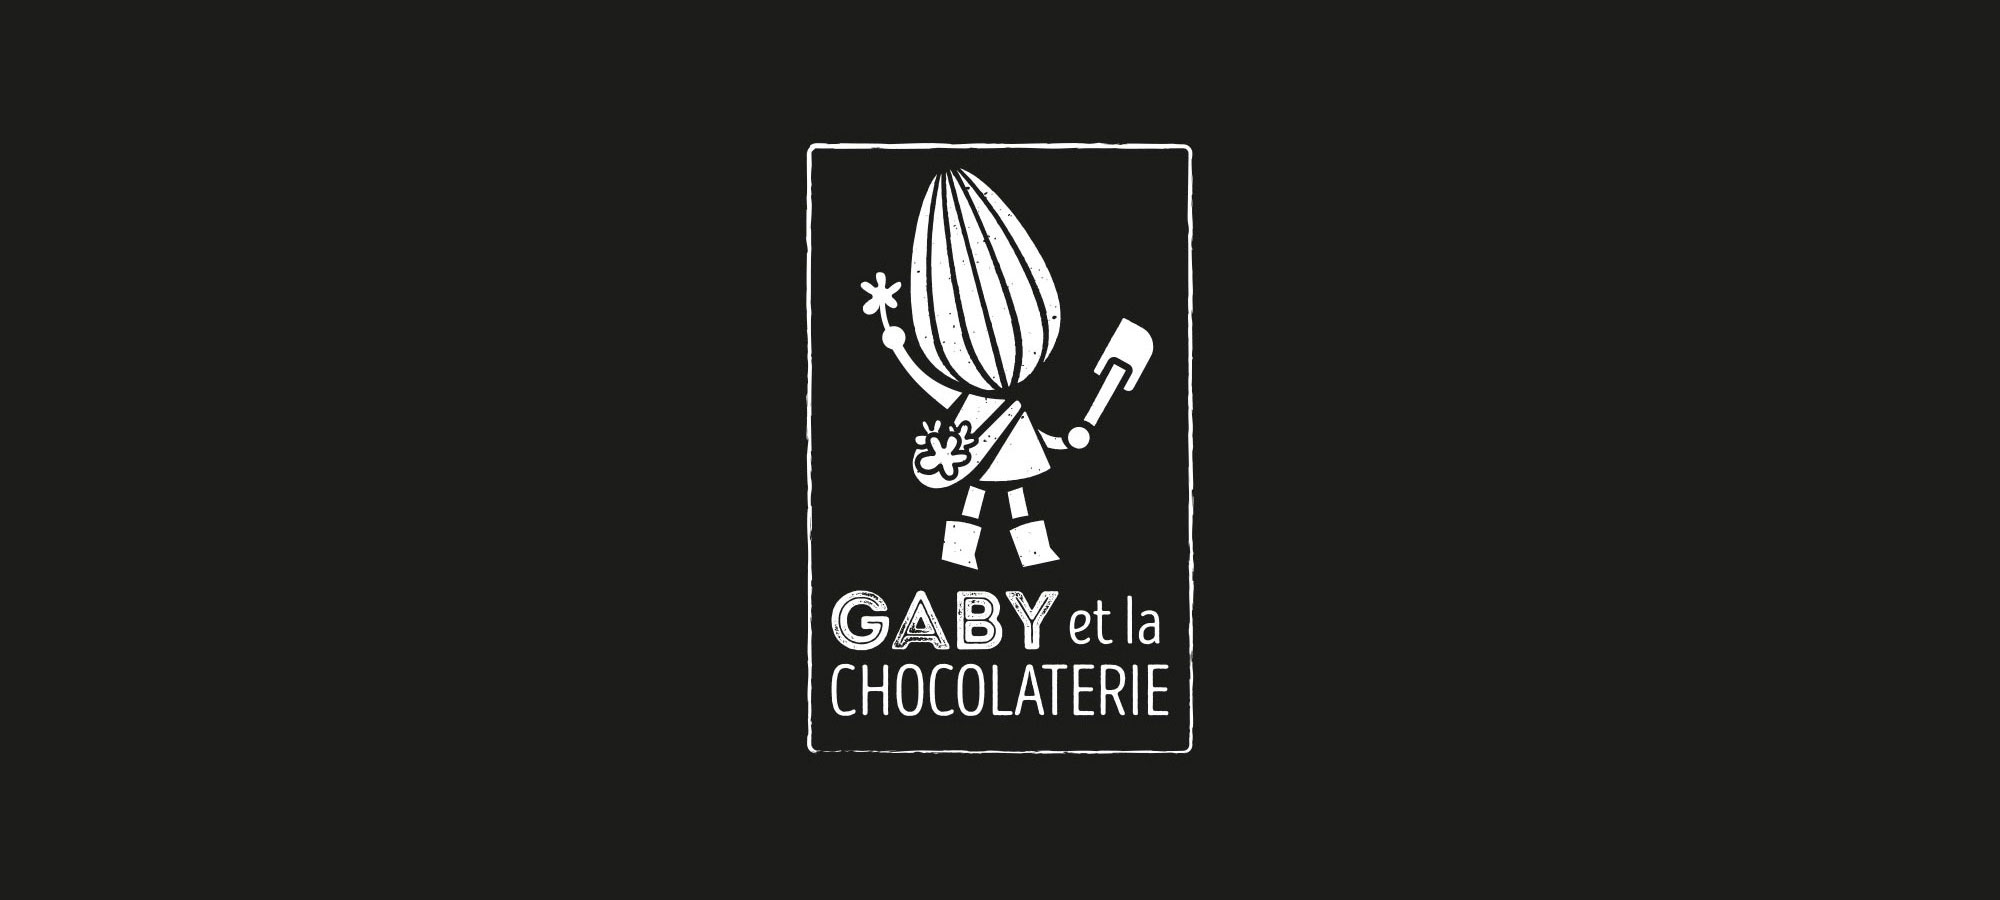 Gaby et la chocolaterie logo